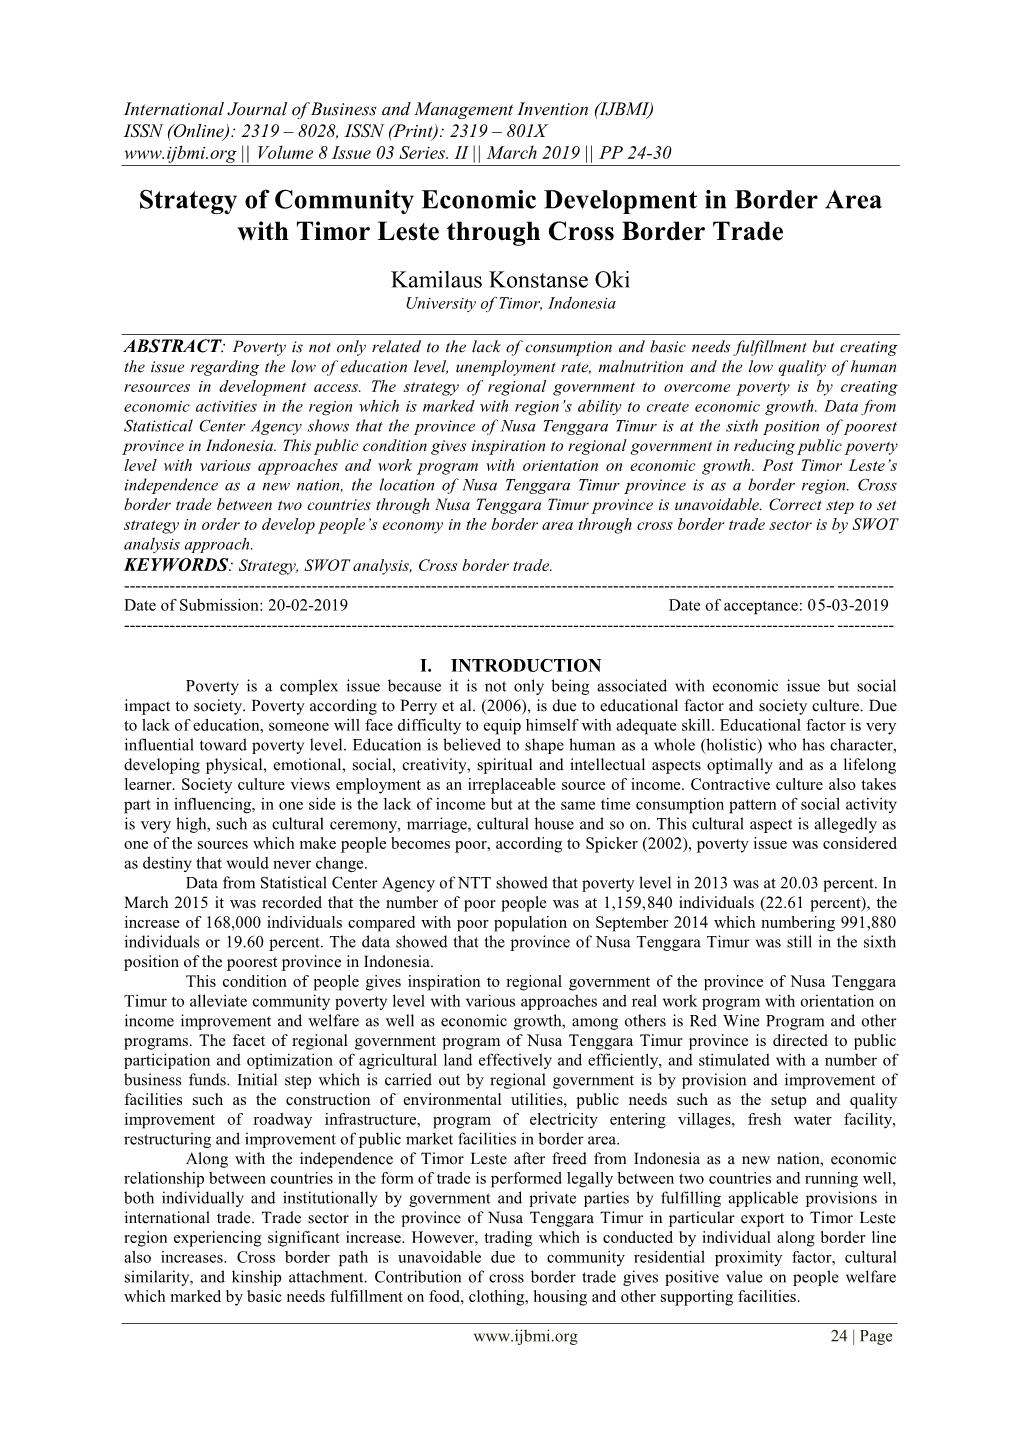 Strategy of Community Economic Development in Border Area with Timor Leste Through Cross Border Trade